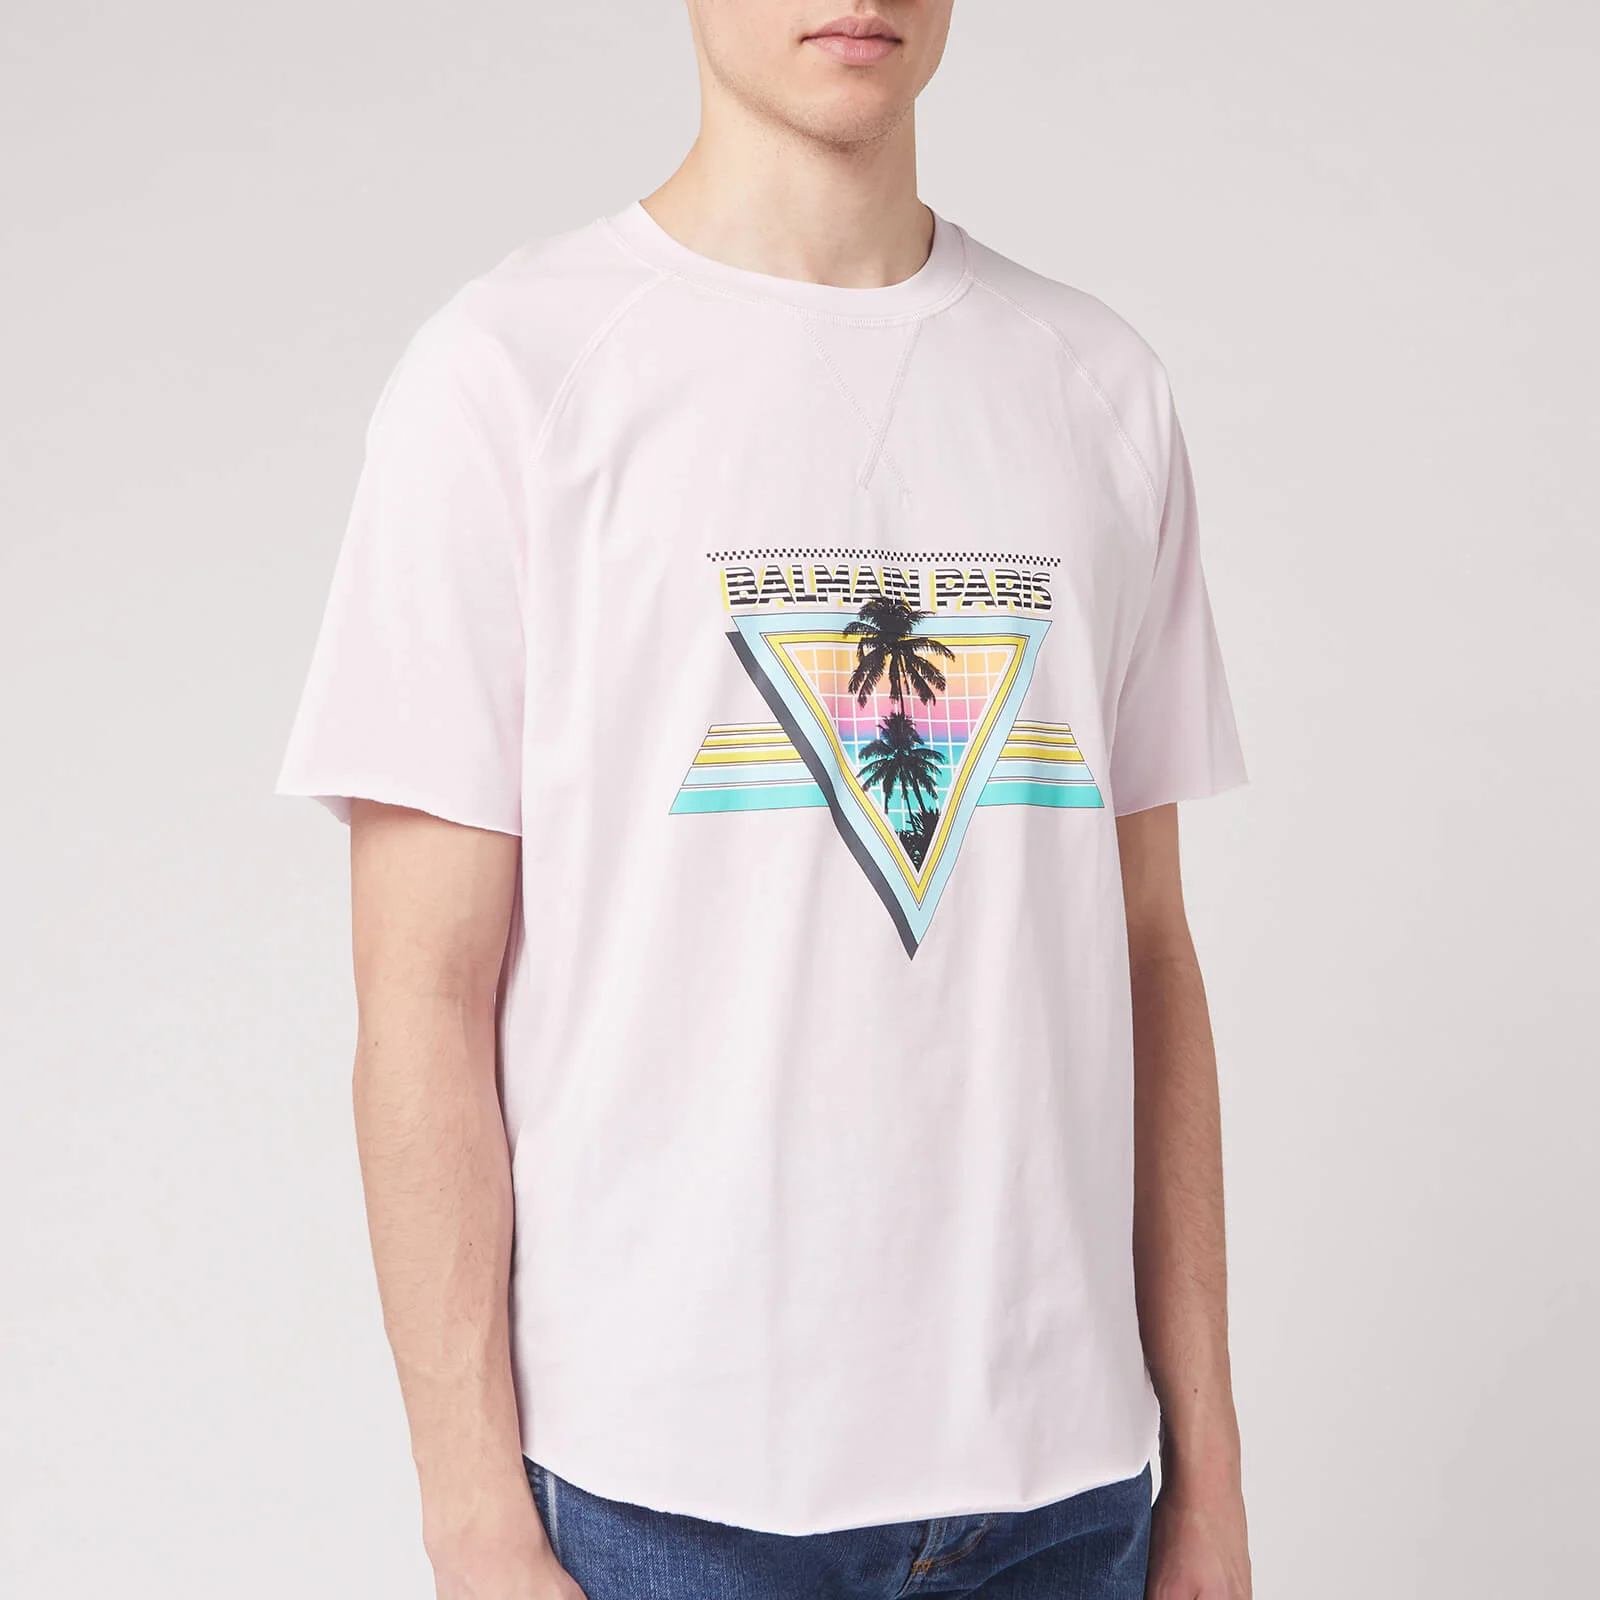 Balmain Men's Printed Raw Edge T-Shirt - Multicolour Image 1